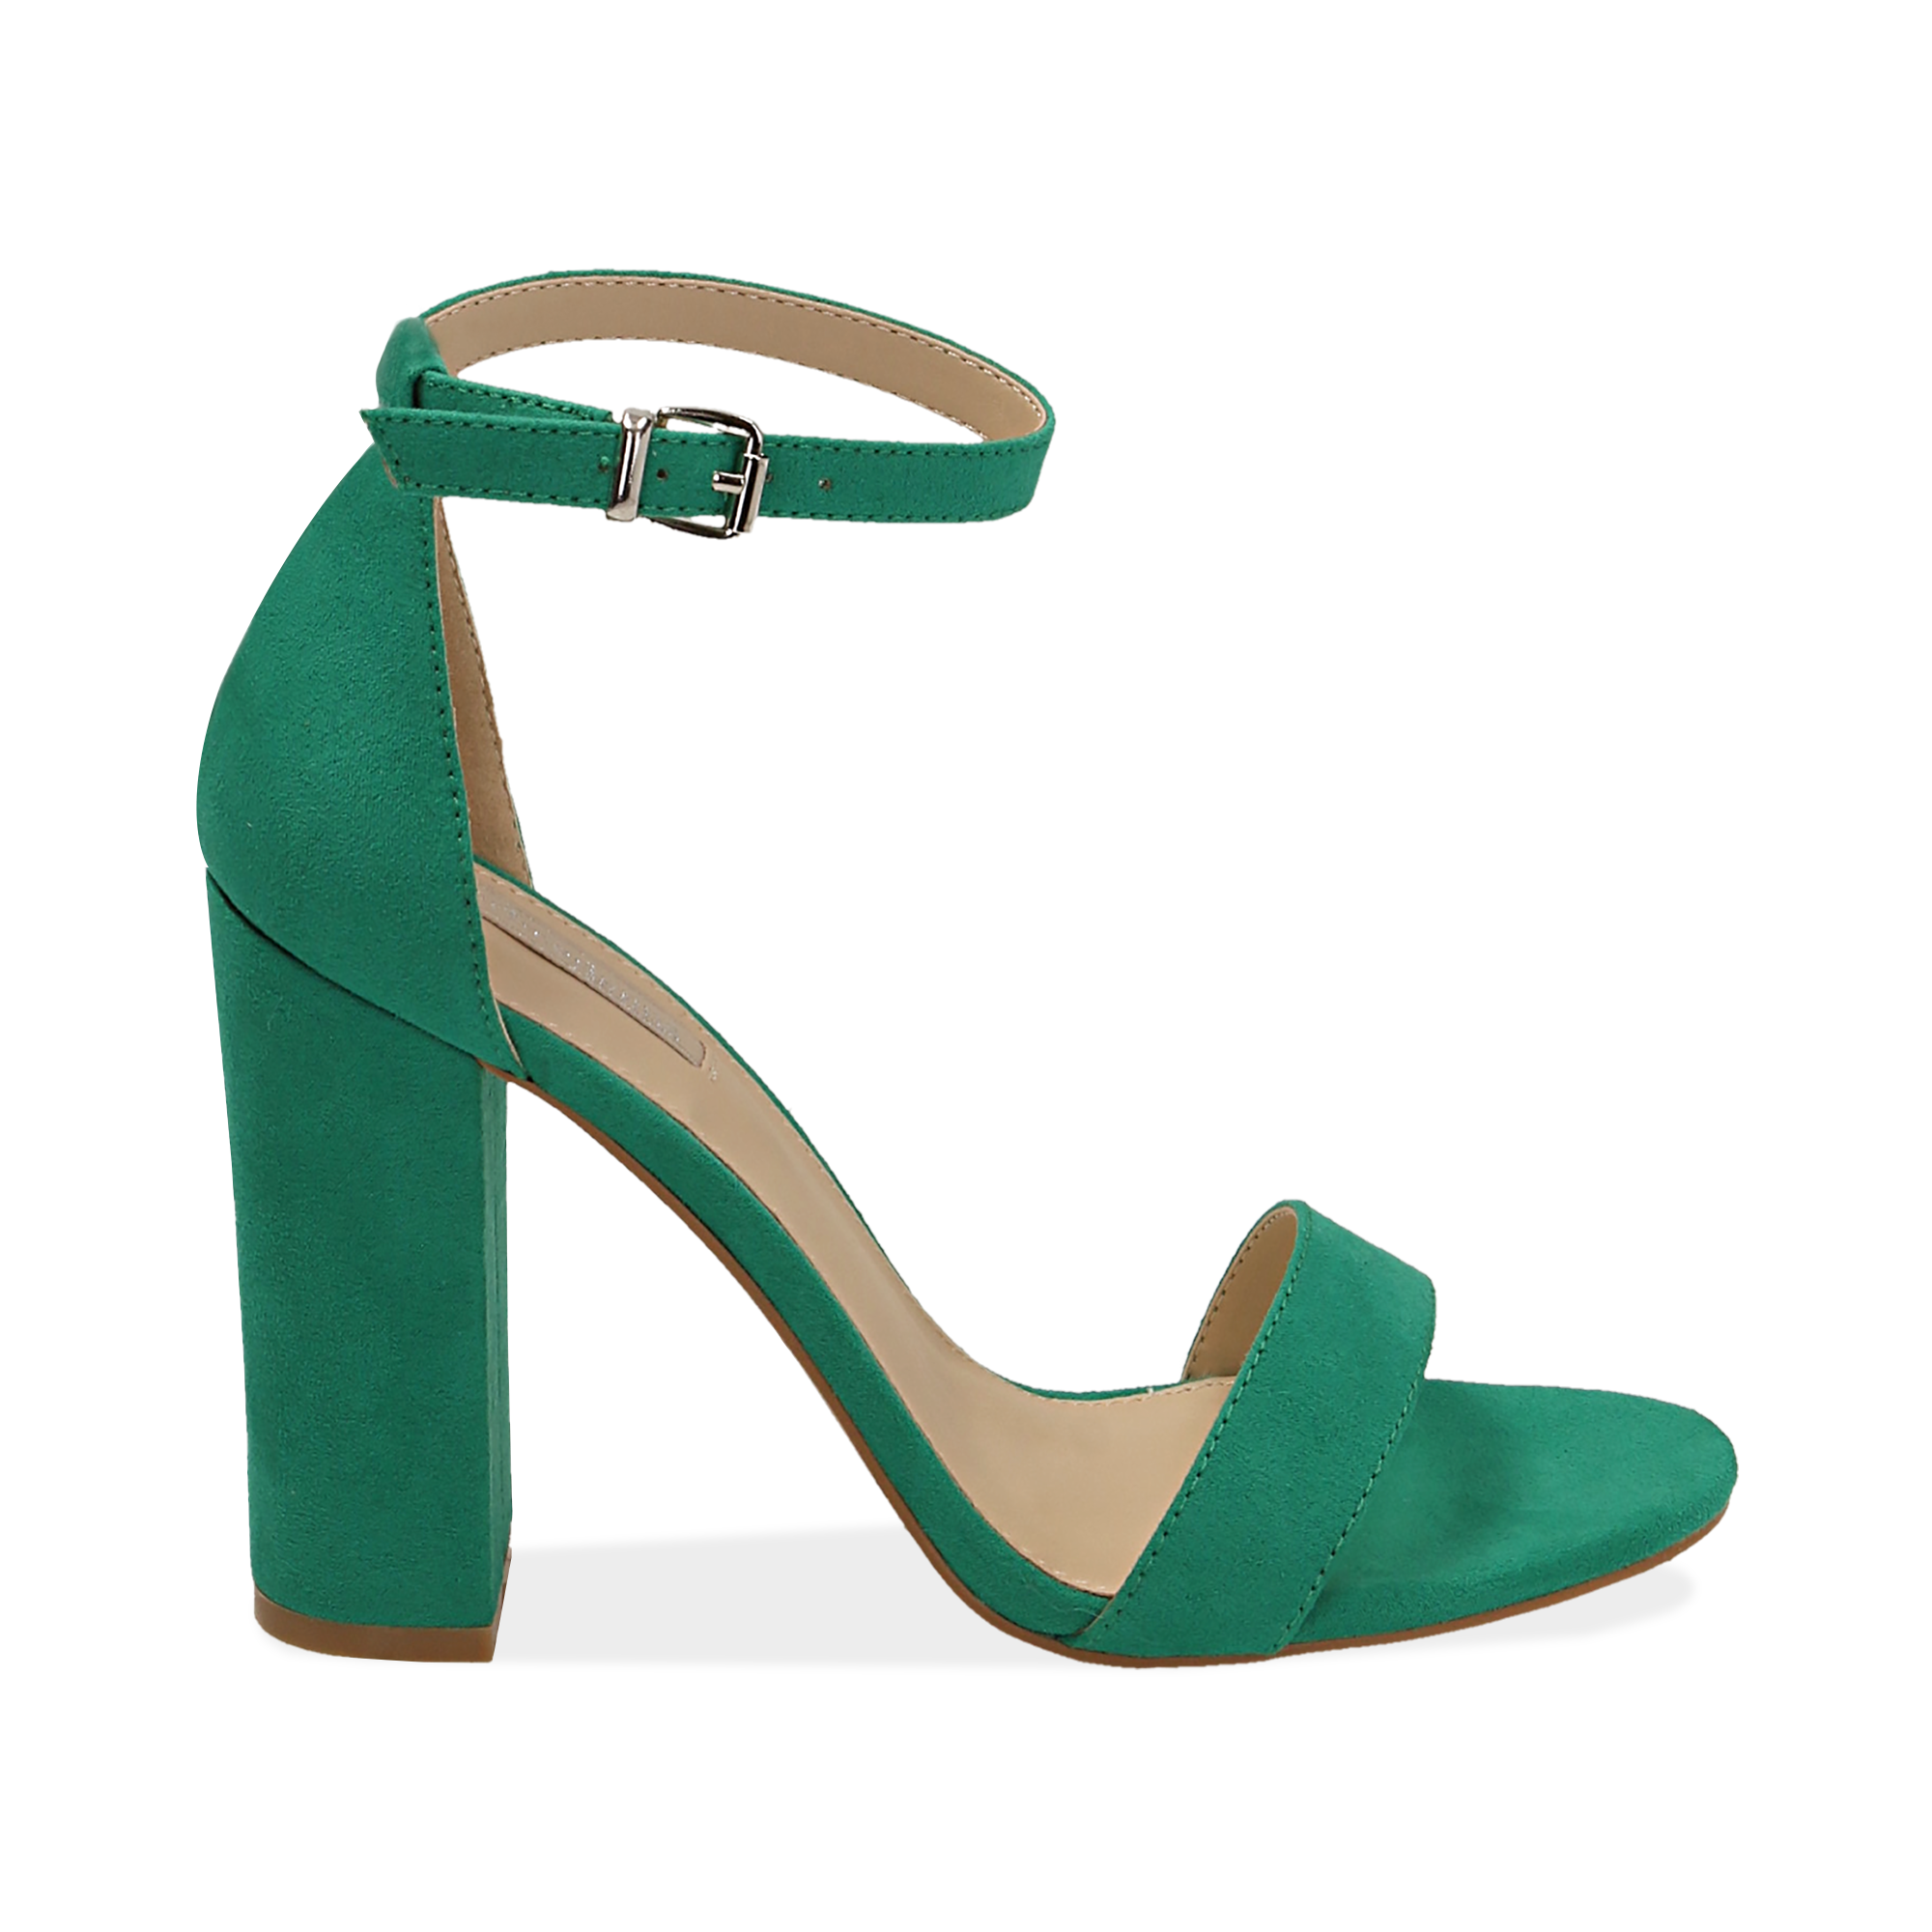 sandali tacco verdi